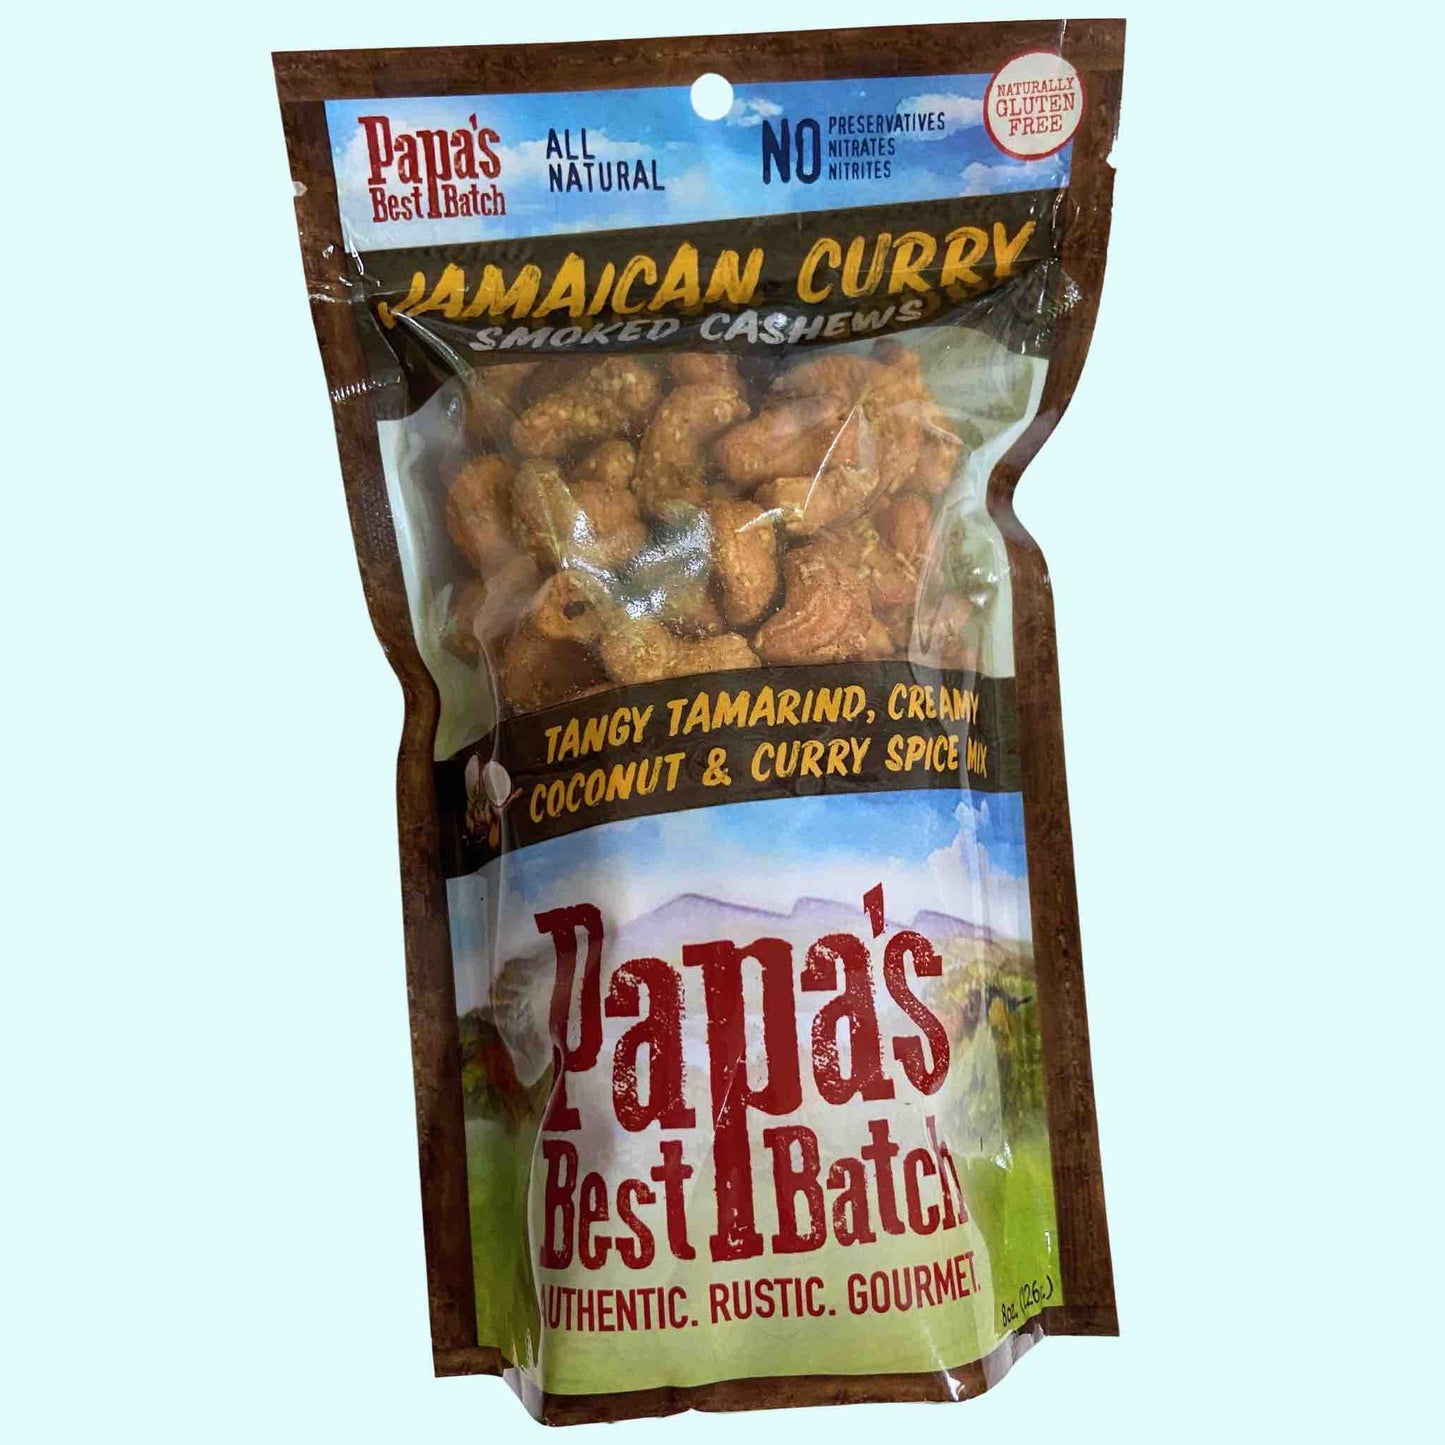 Jamaican Curry Smoked Cashews